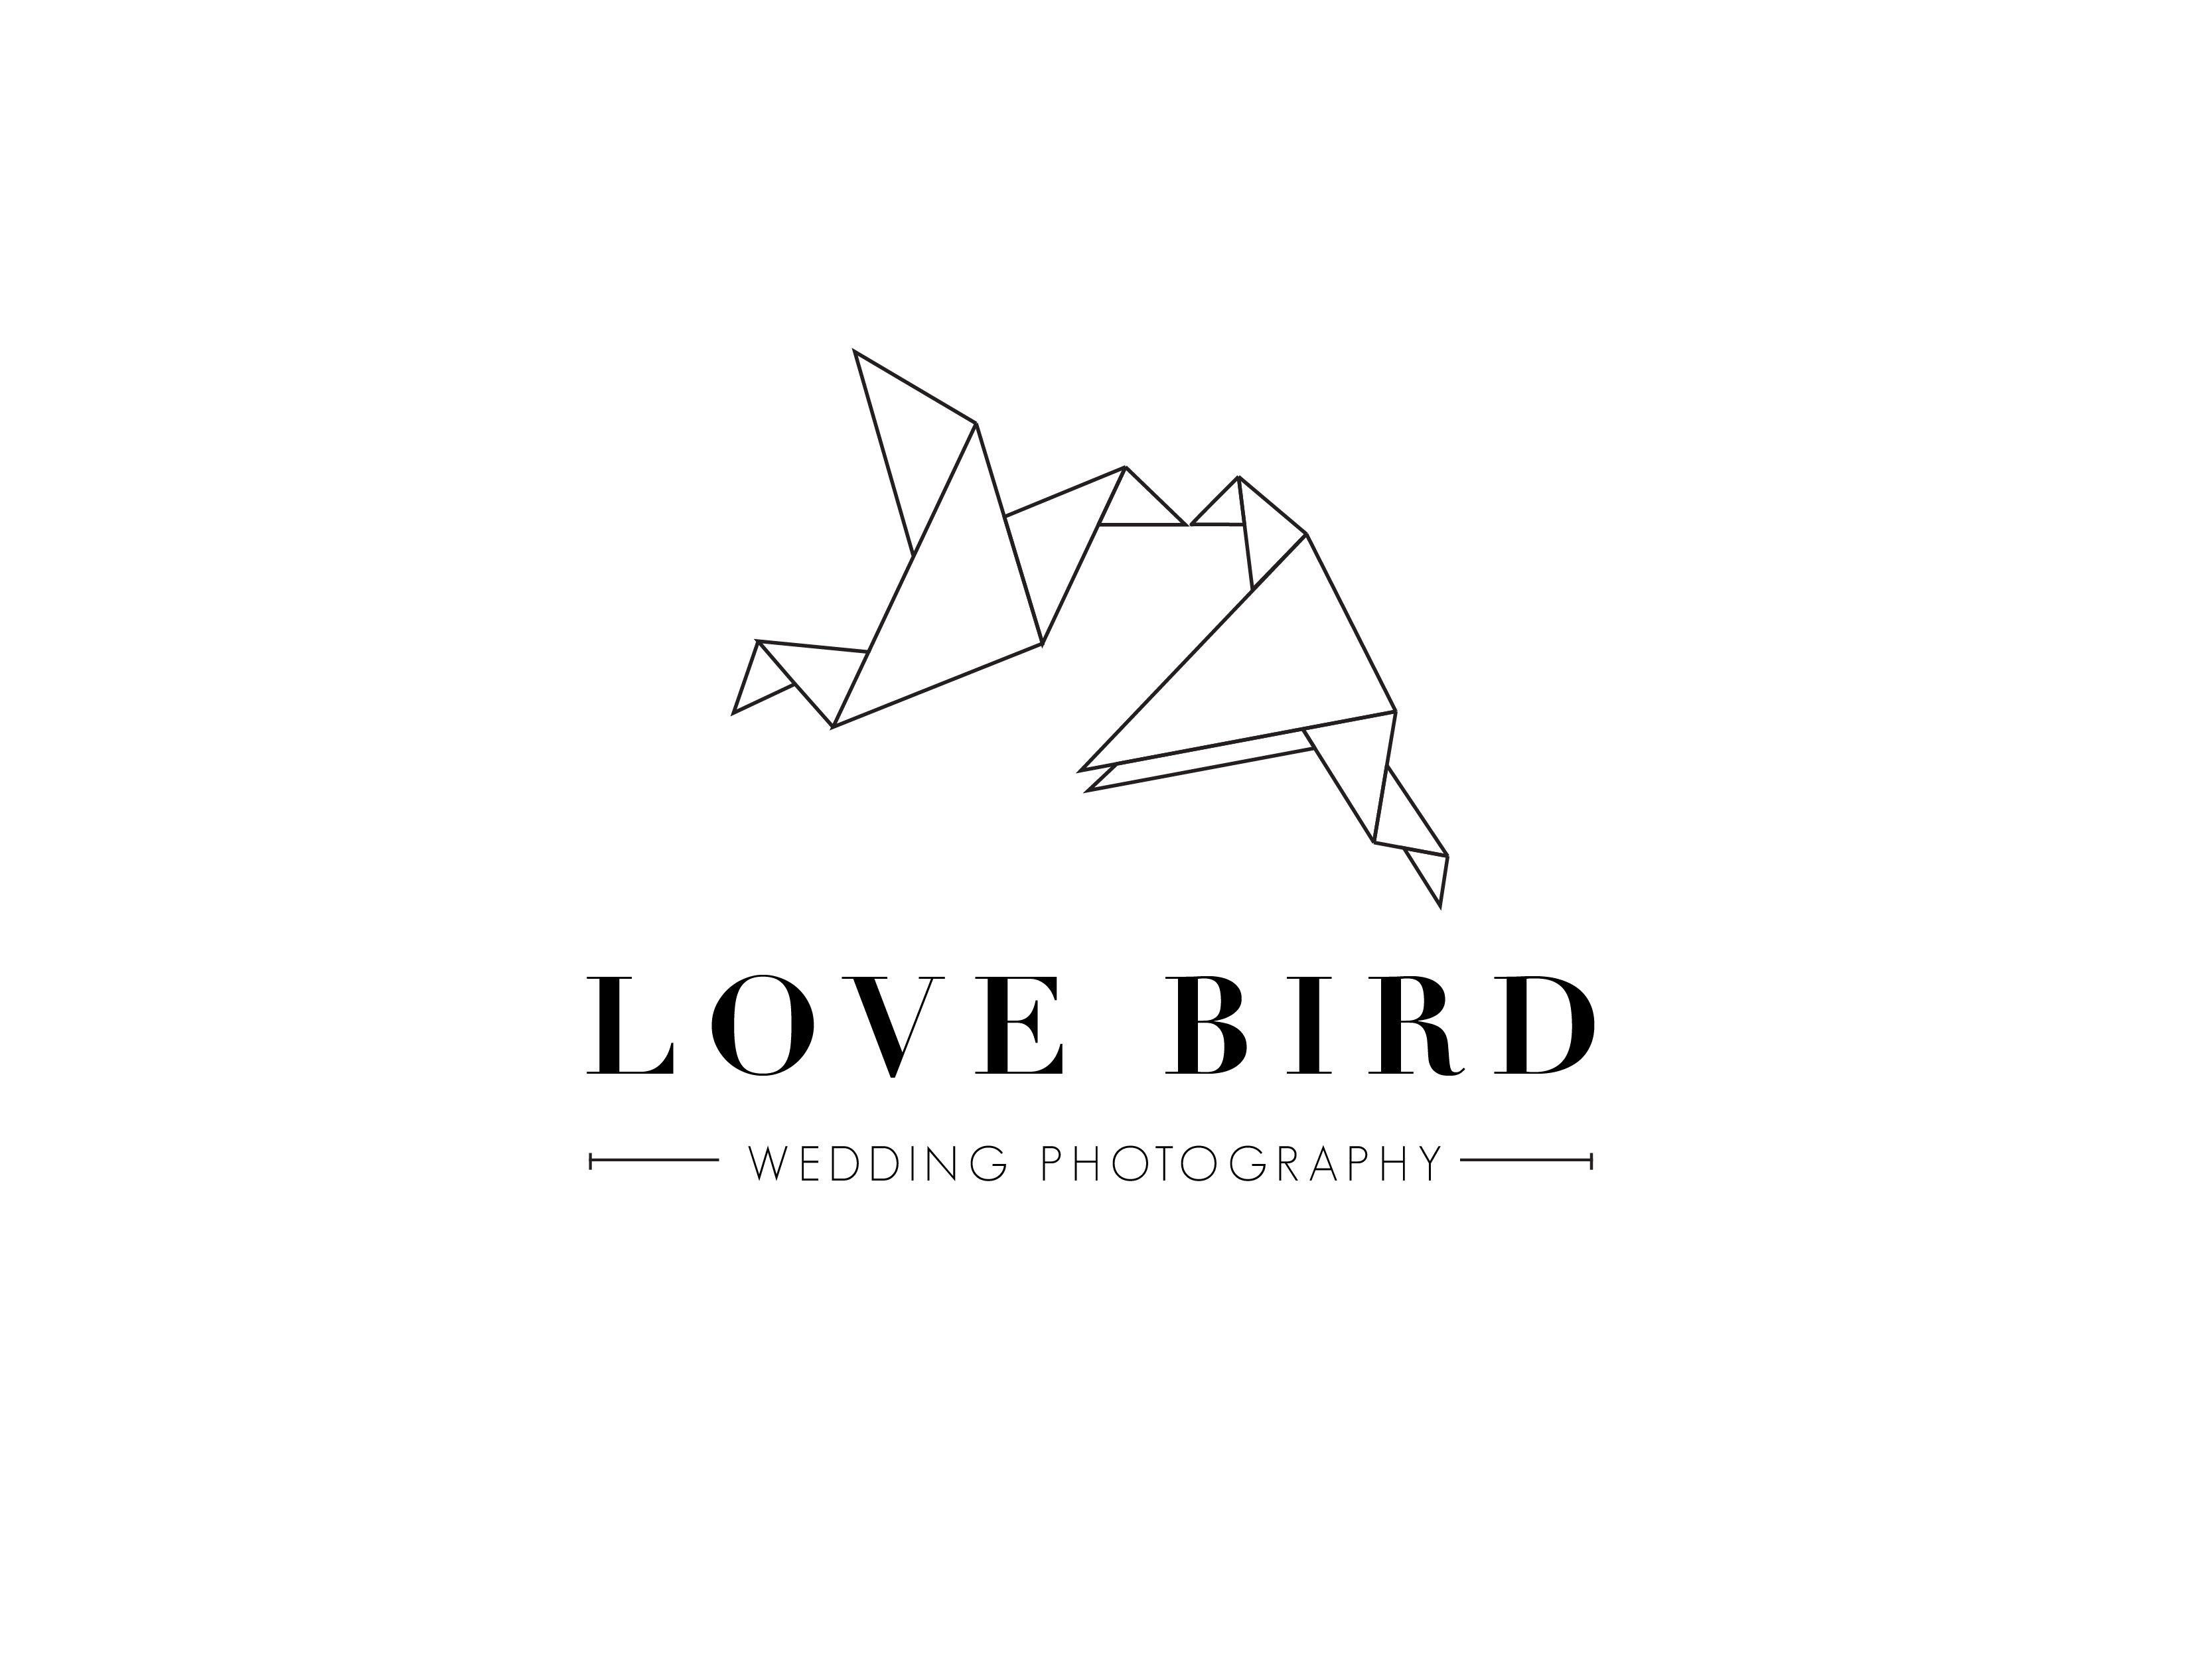 Love Birds Logo - Just My Type} Love bird logo | Just My Type